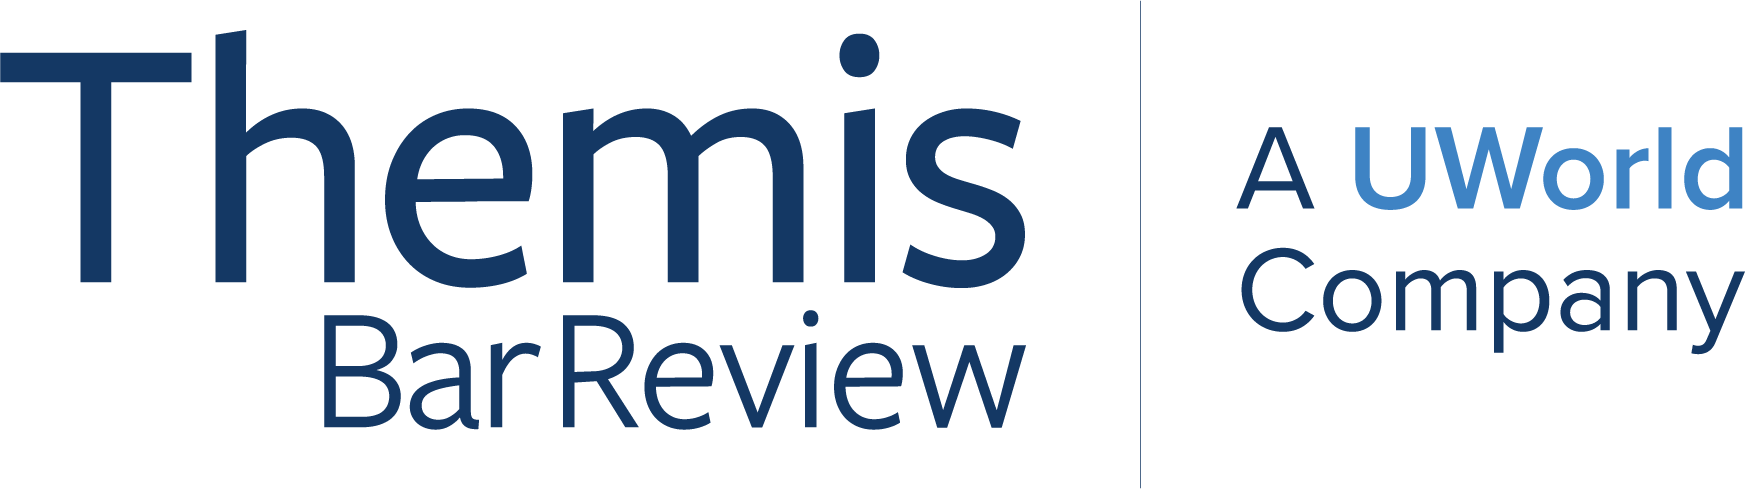 UWorld logo plus Themis Bar Review logo